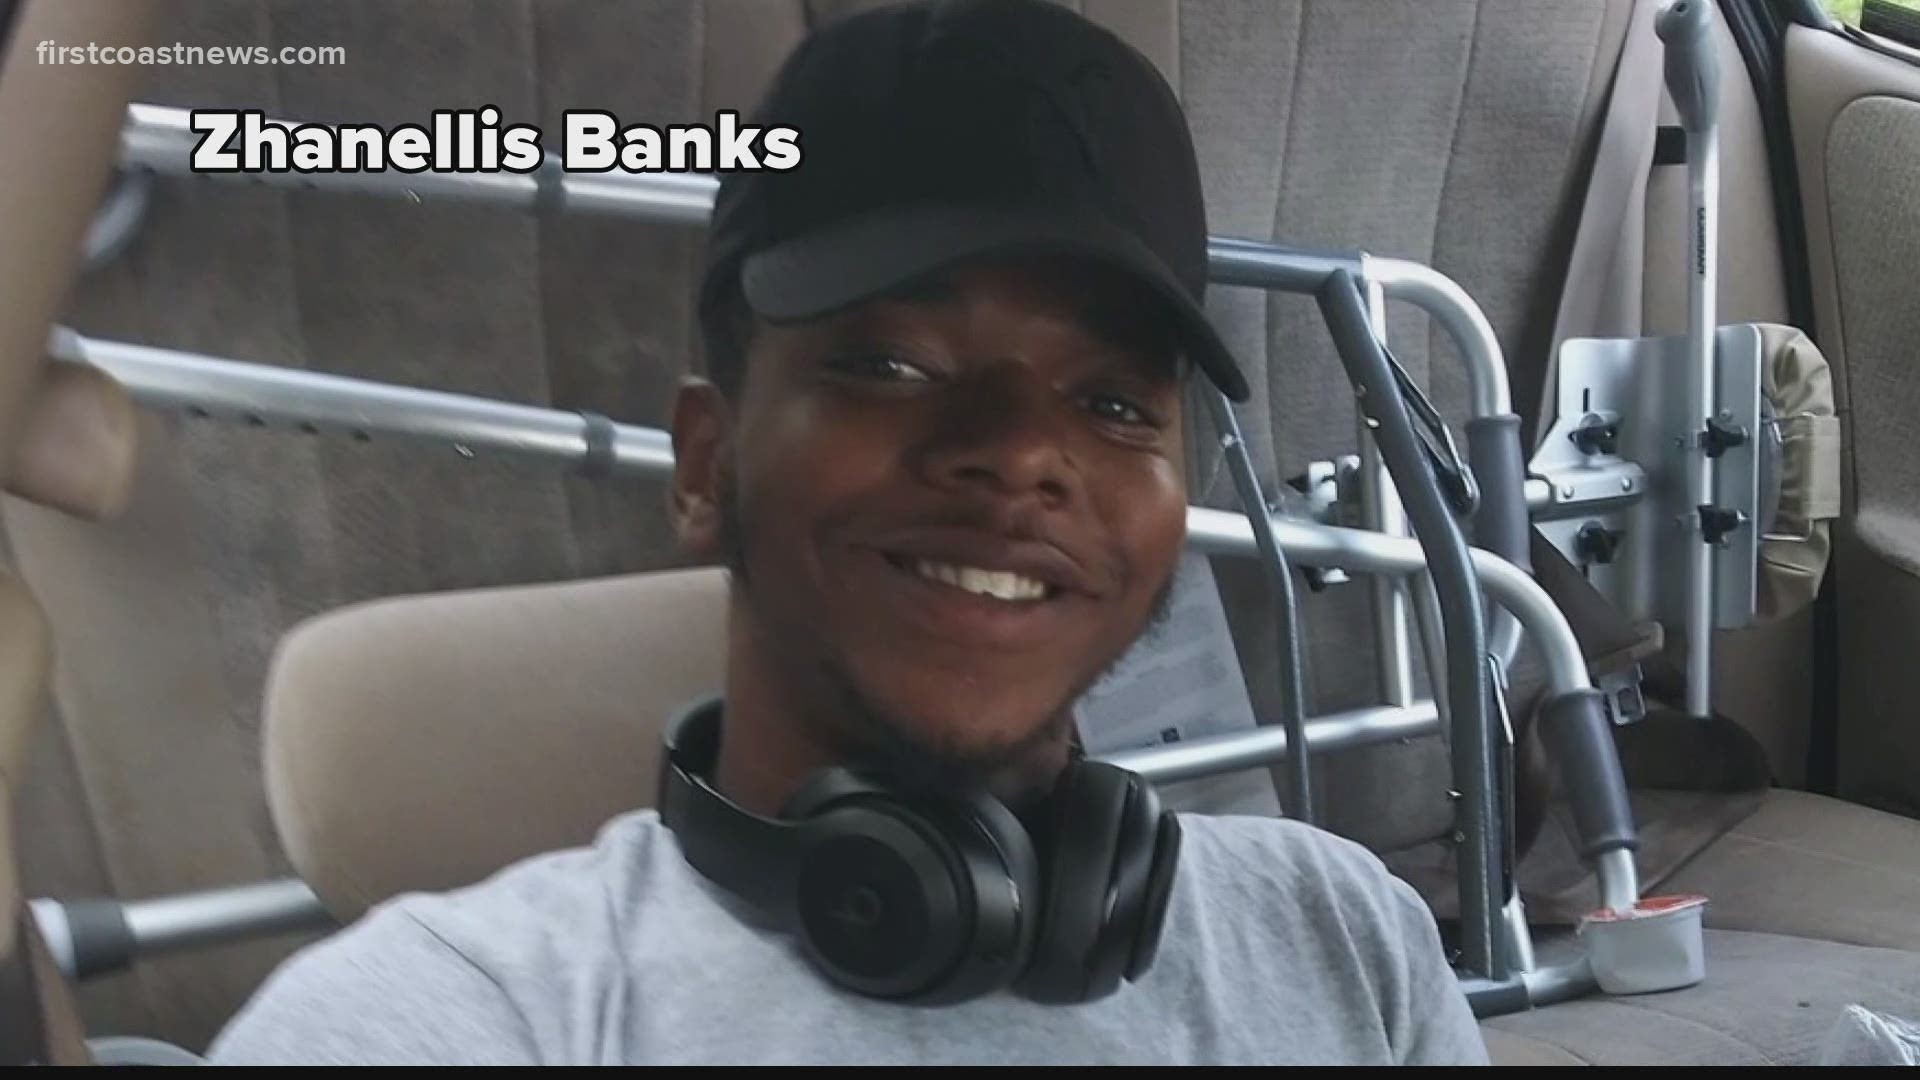 Jacksonville man killed in Chicago, police say